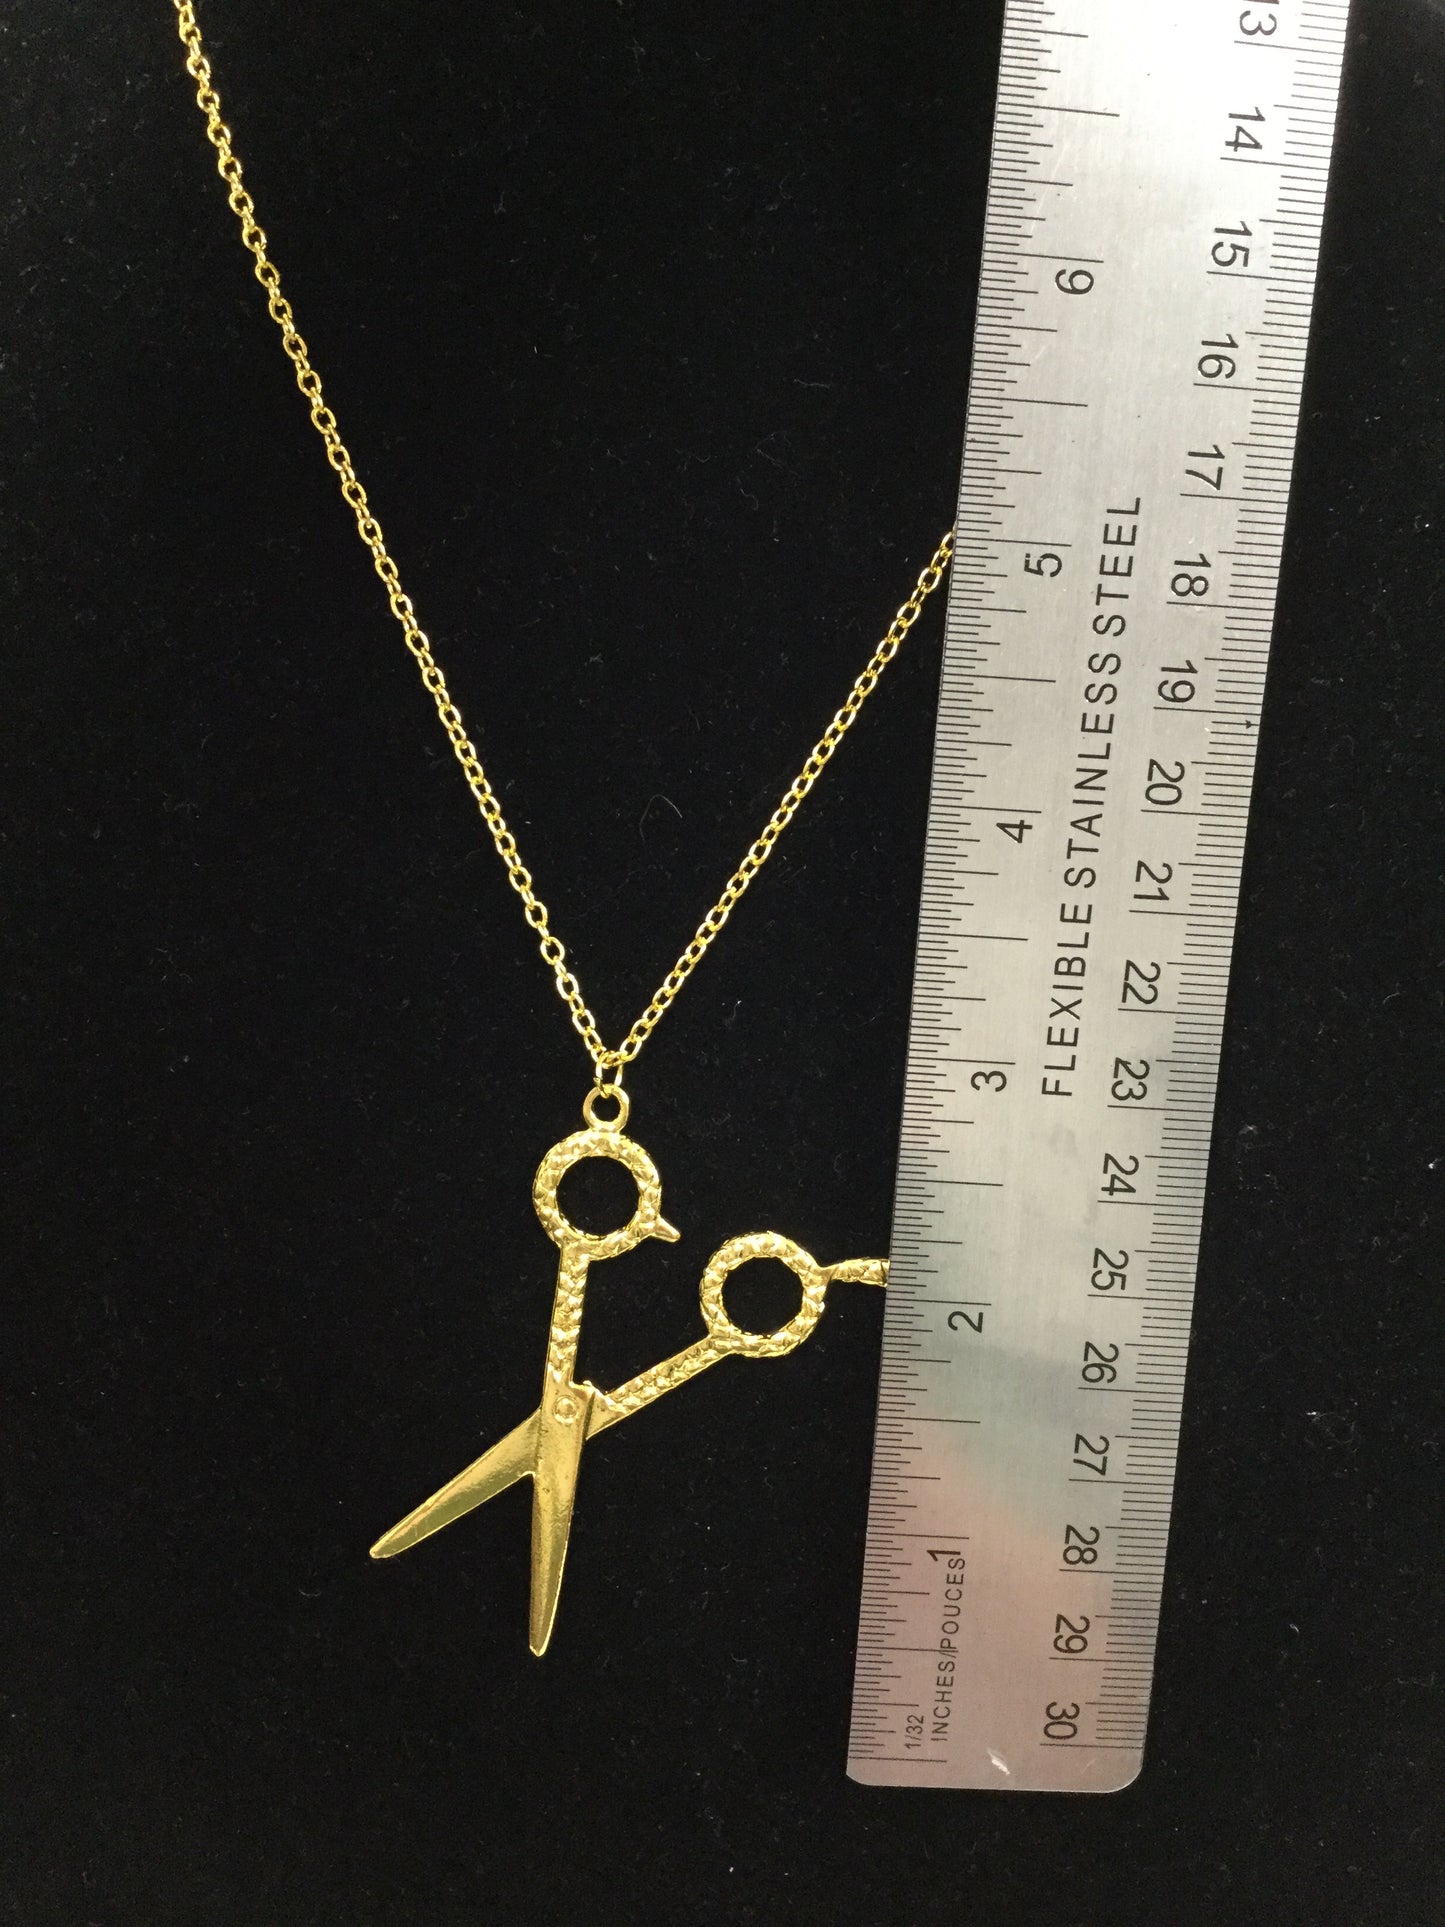 Scissor Pendant with Textured Handles Necklace